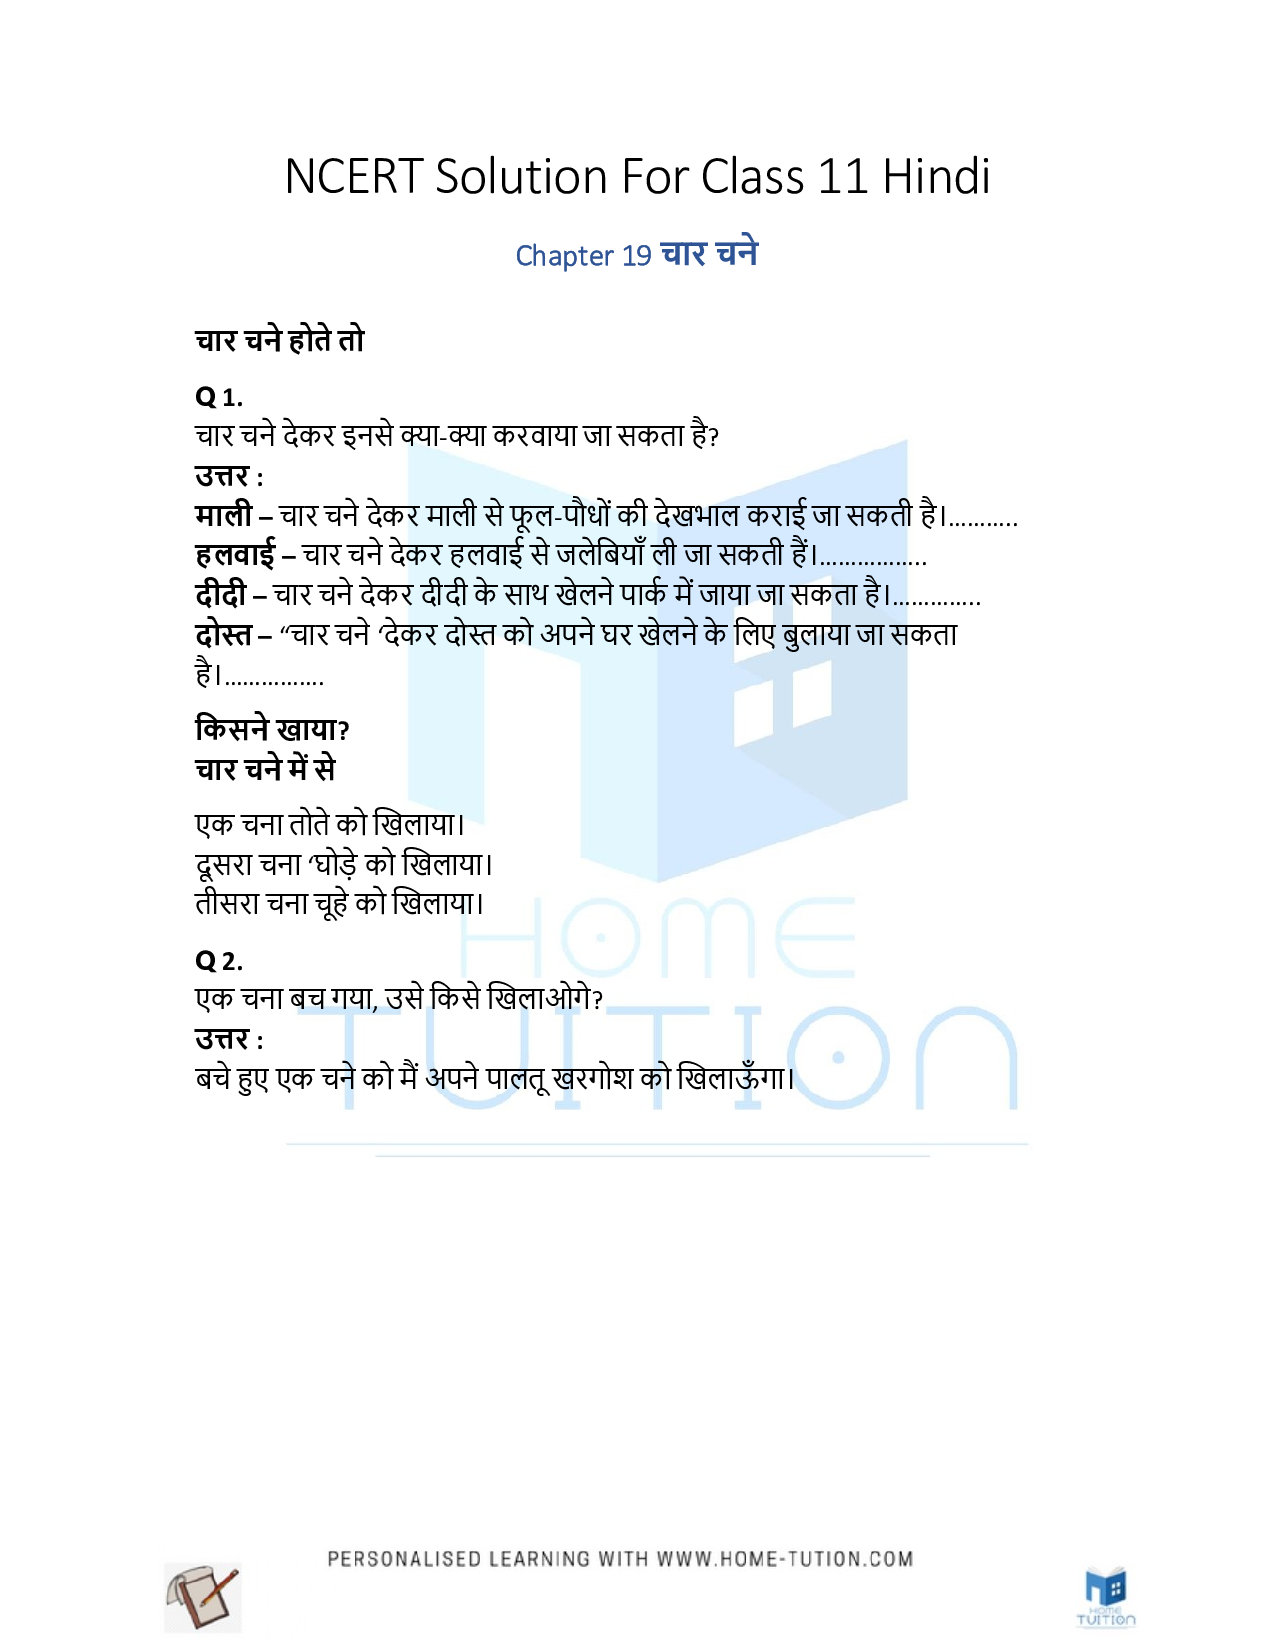 NCERT Solution for Class 1 Hindi Chapter 19 Char Chane (चार-चने)